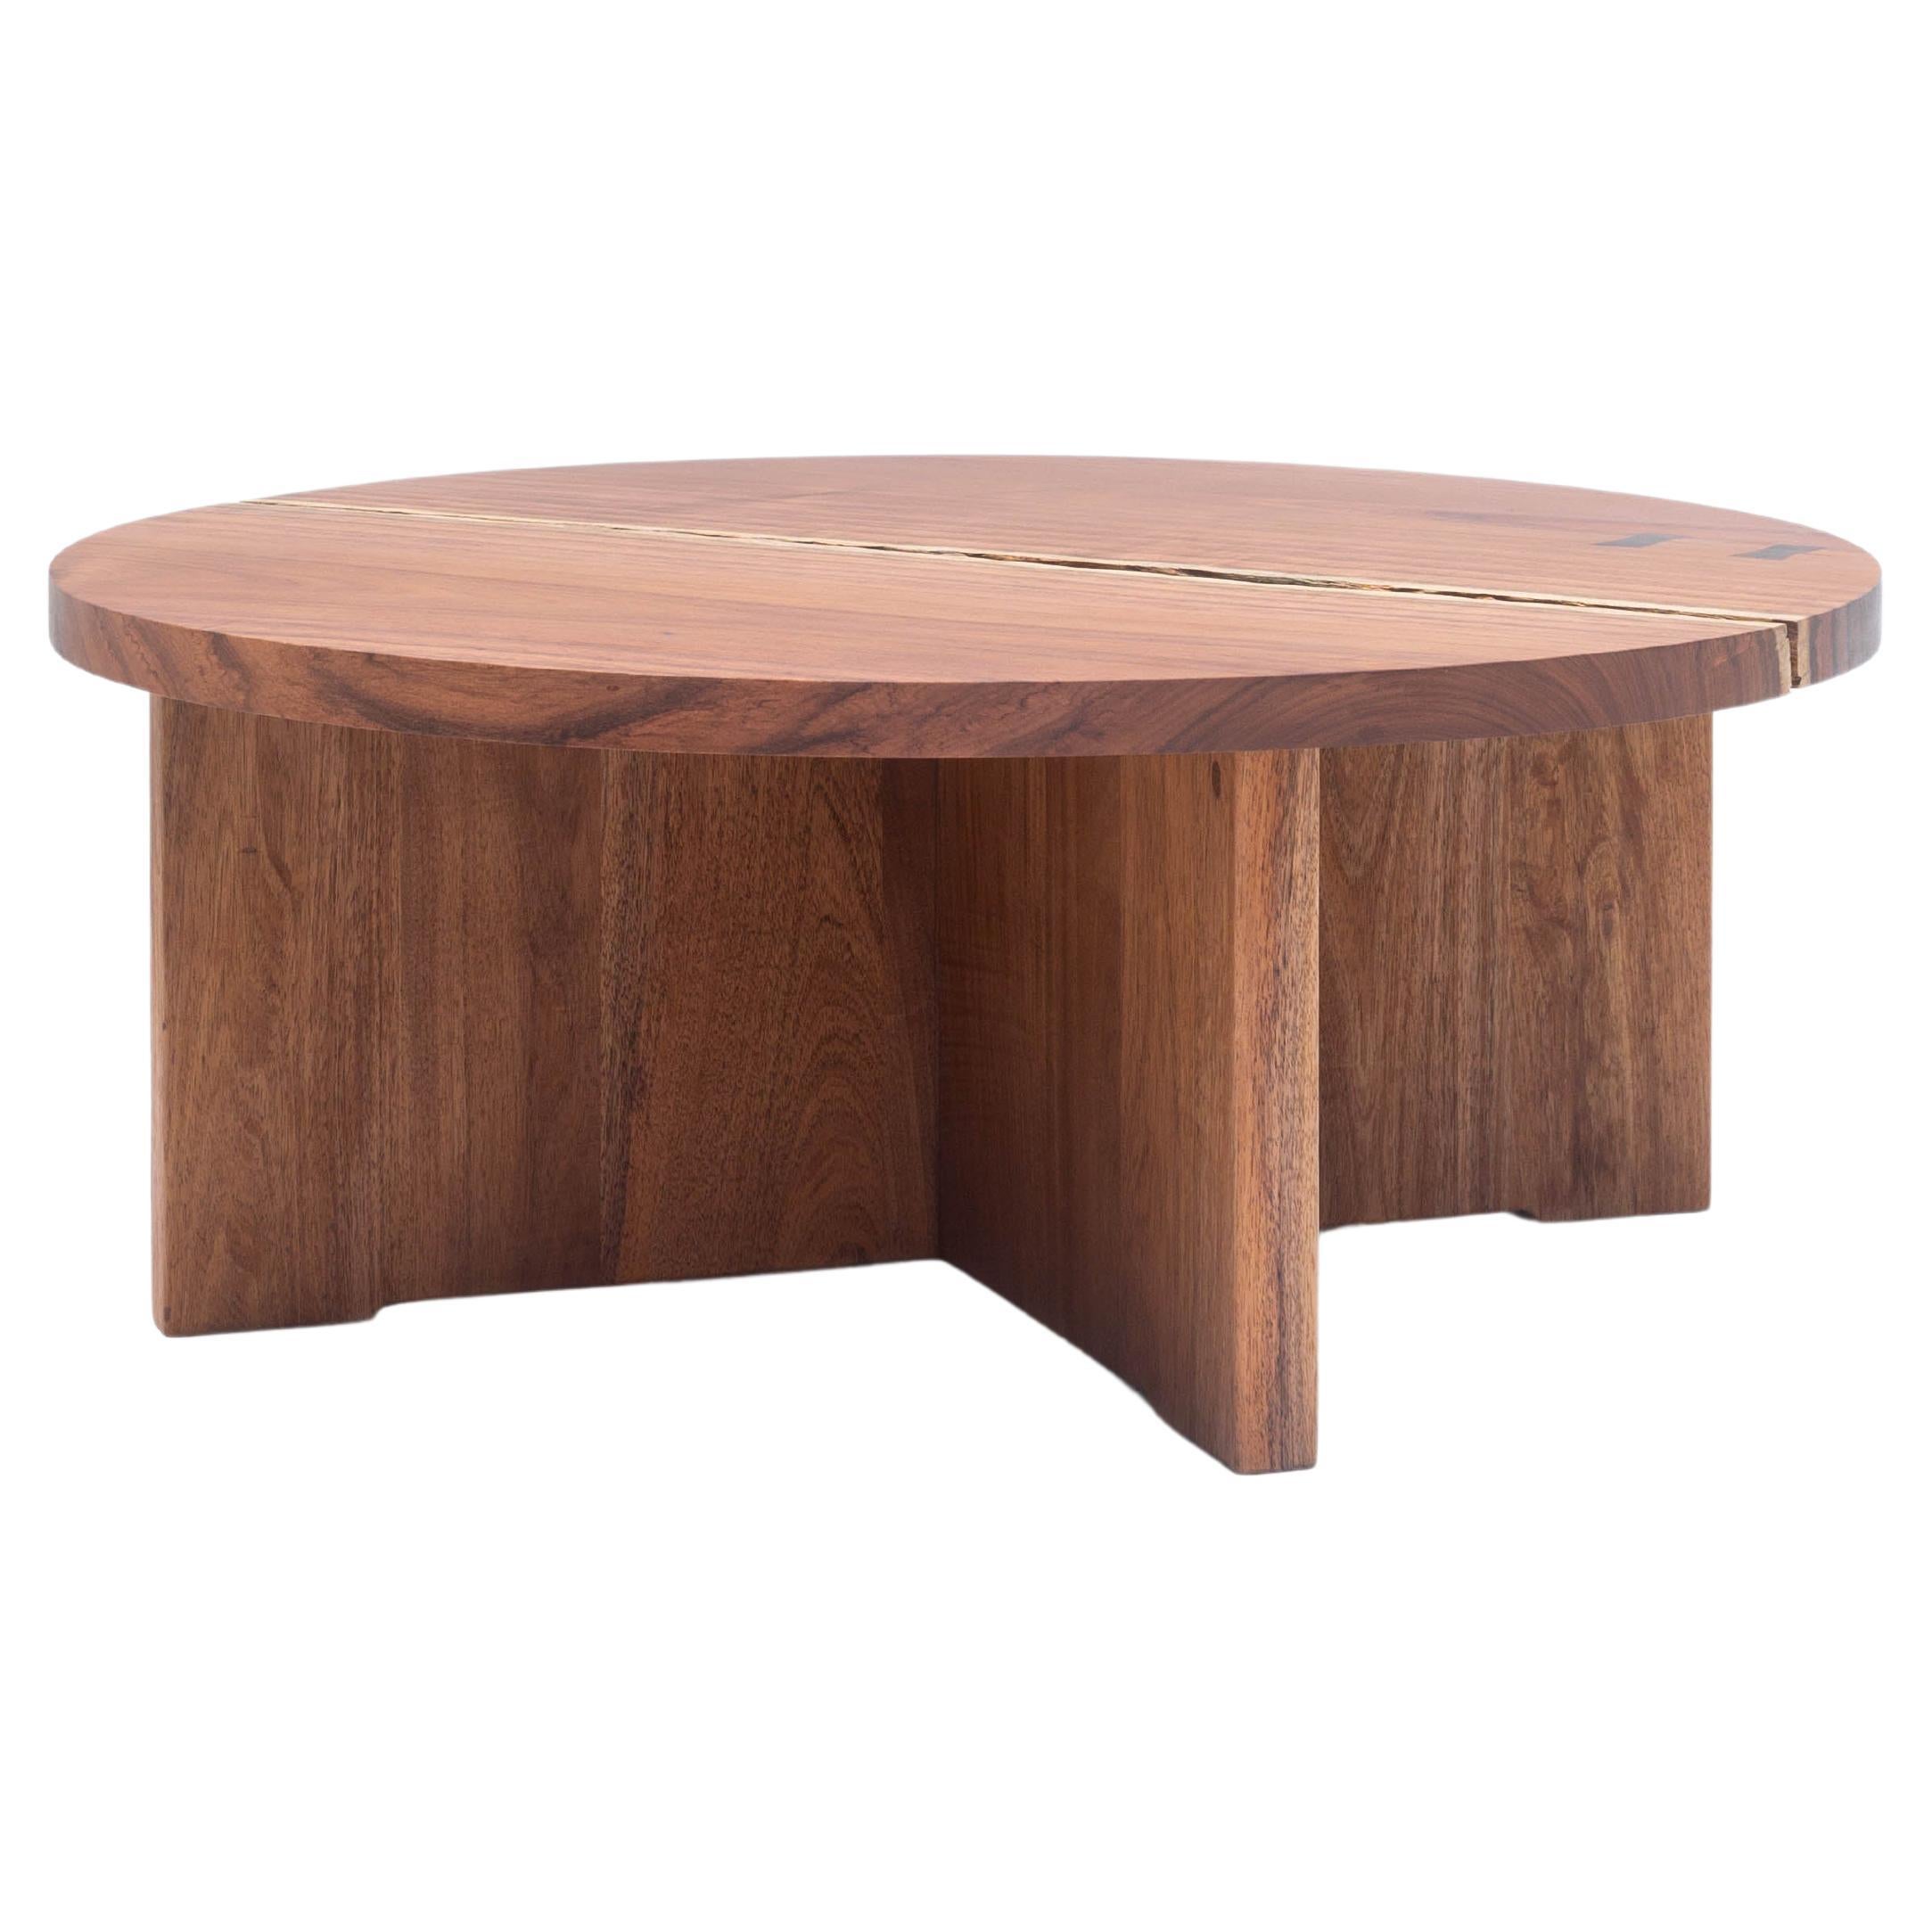 Natural Edge Coffee Table, Caribbean Walnut Wood, Mexican Design